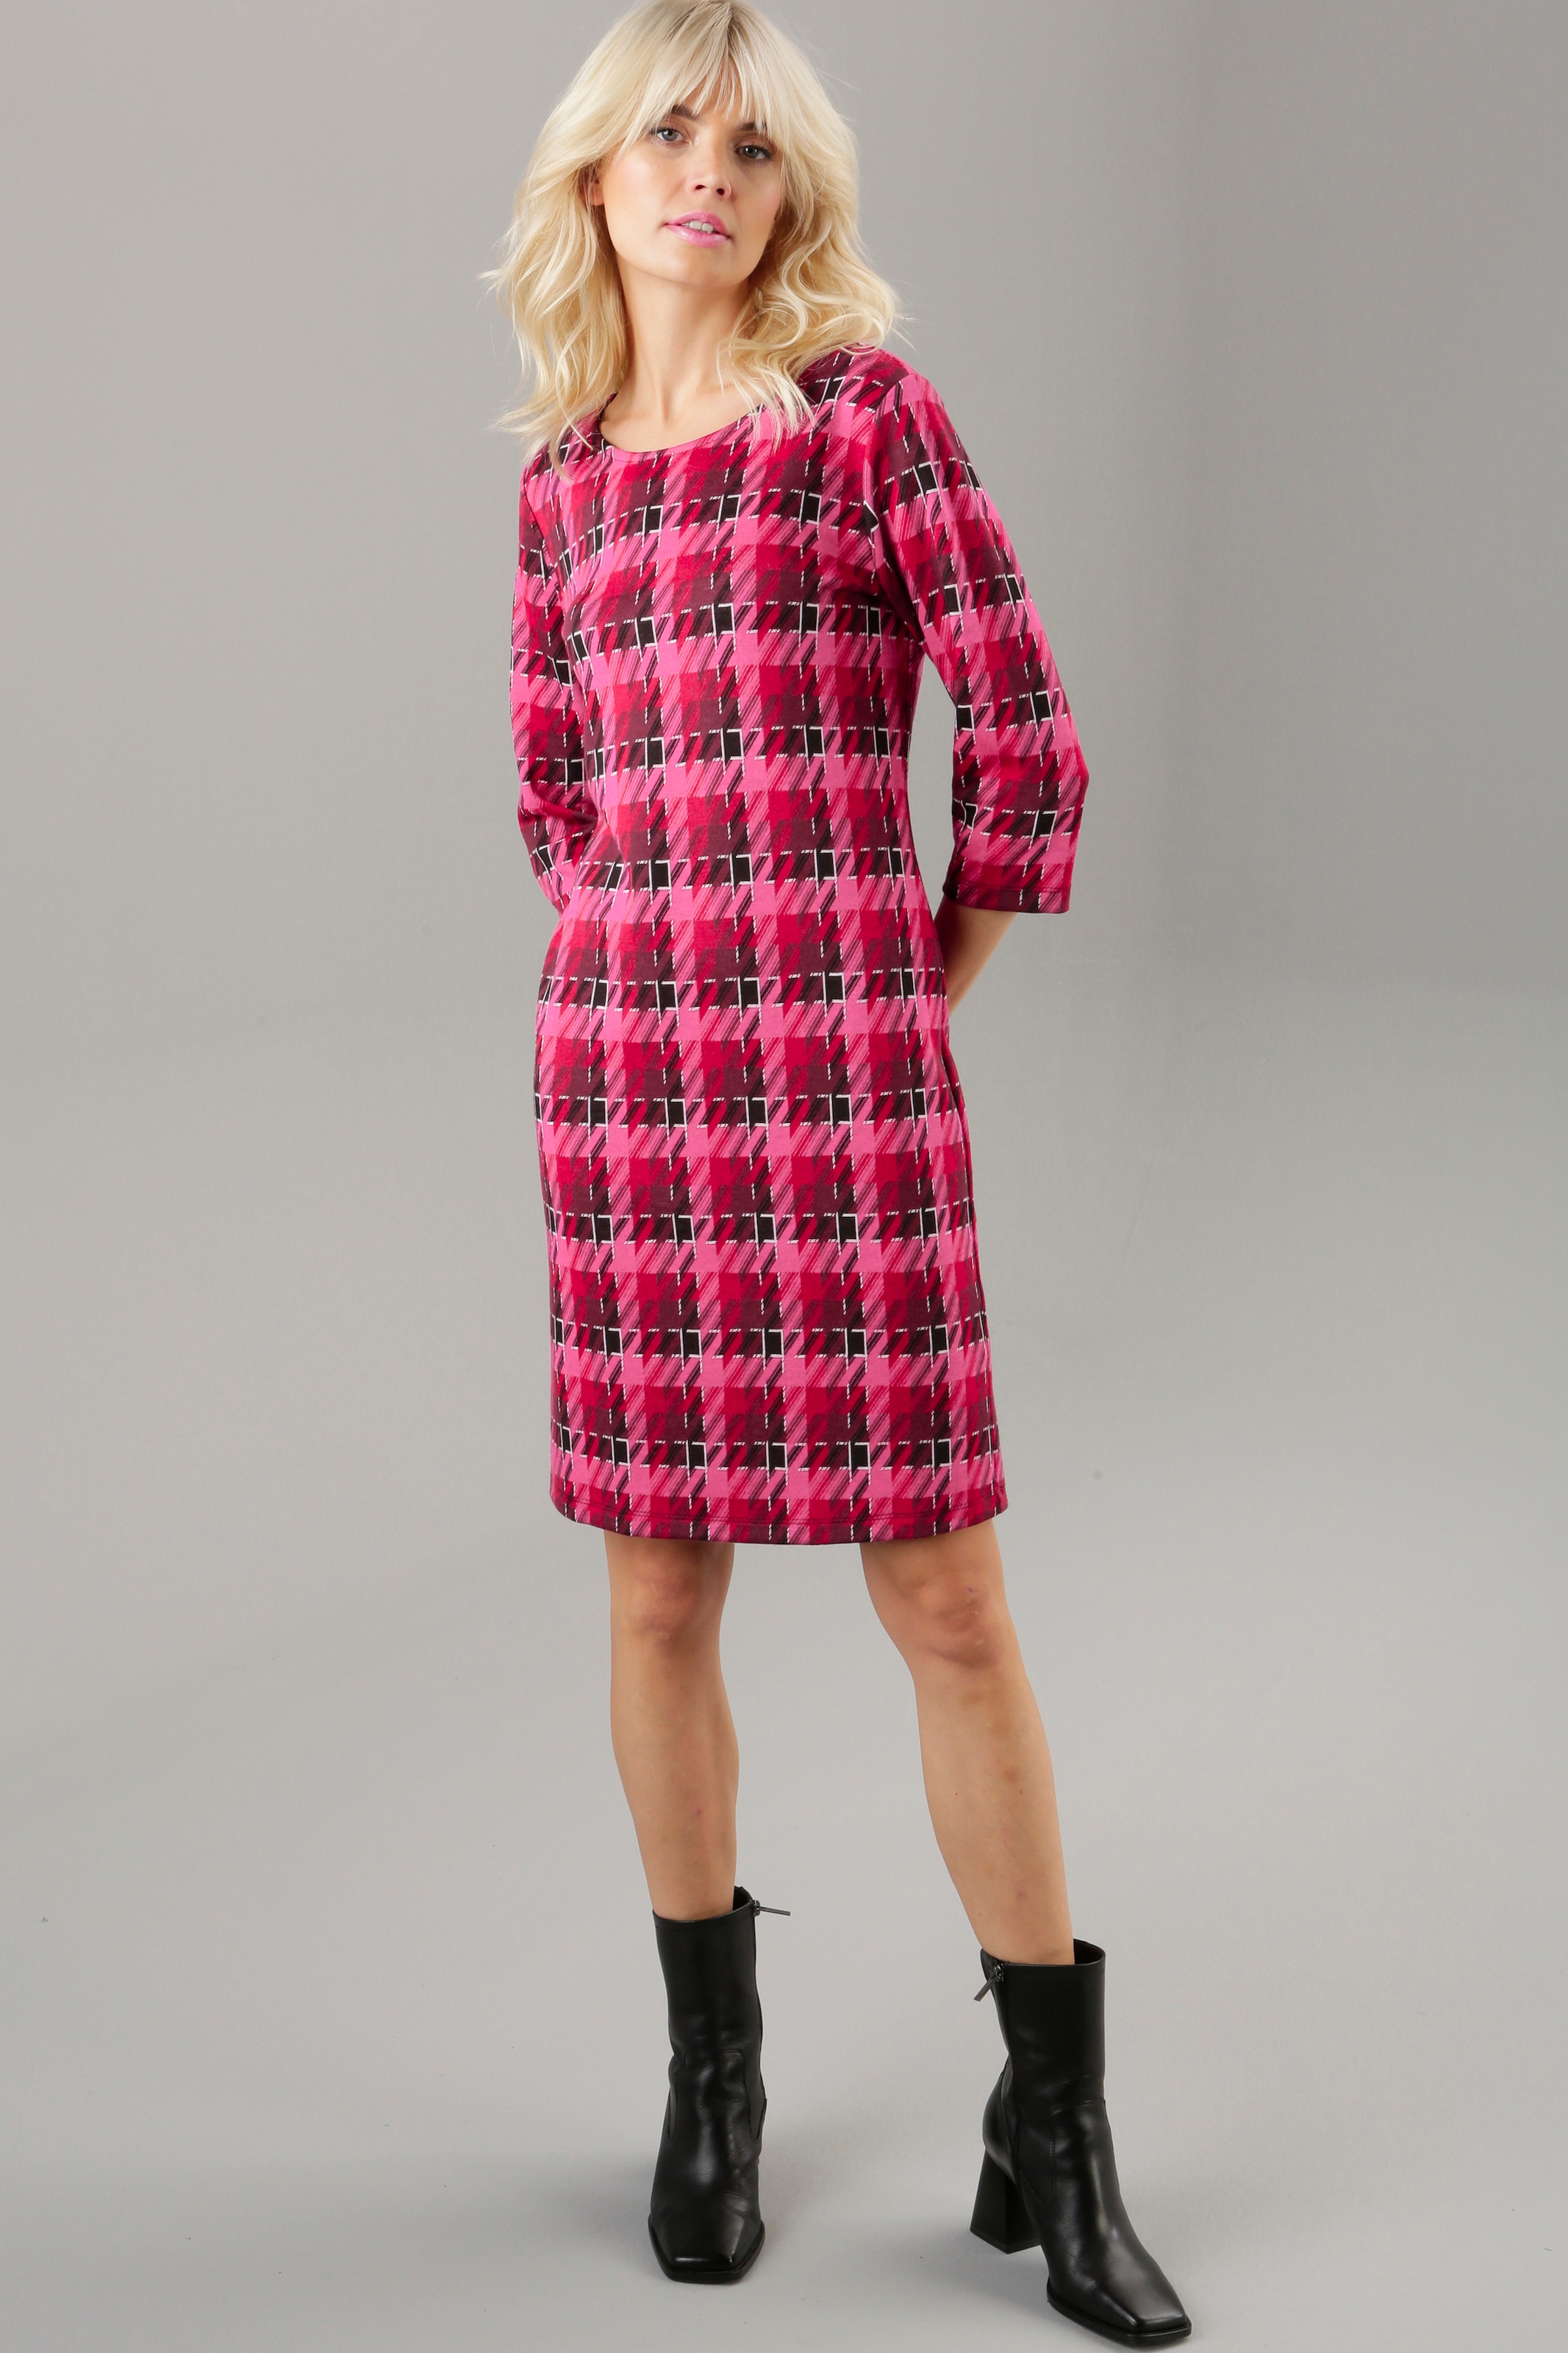 Aniston SELECTED Jerseykleid NEUE trendy mit Knallfarben Allover-Muster - KOLLEKTION in